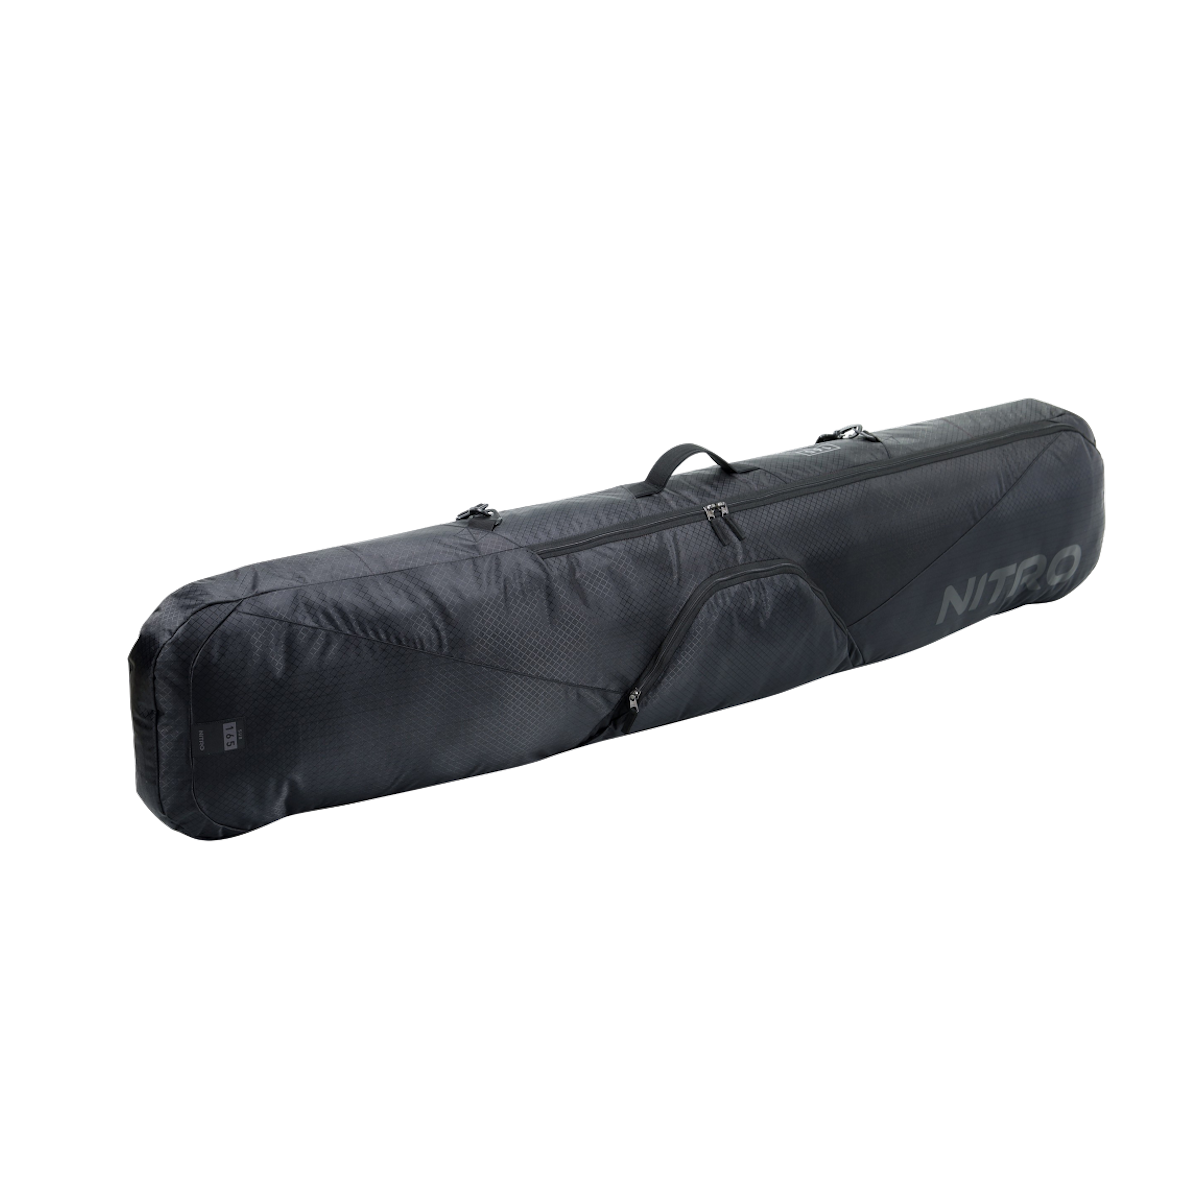 NITRO SUB BOARD BAG 165cm black phantom snovborda soma